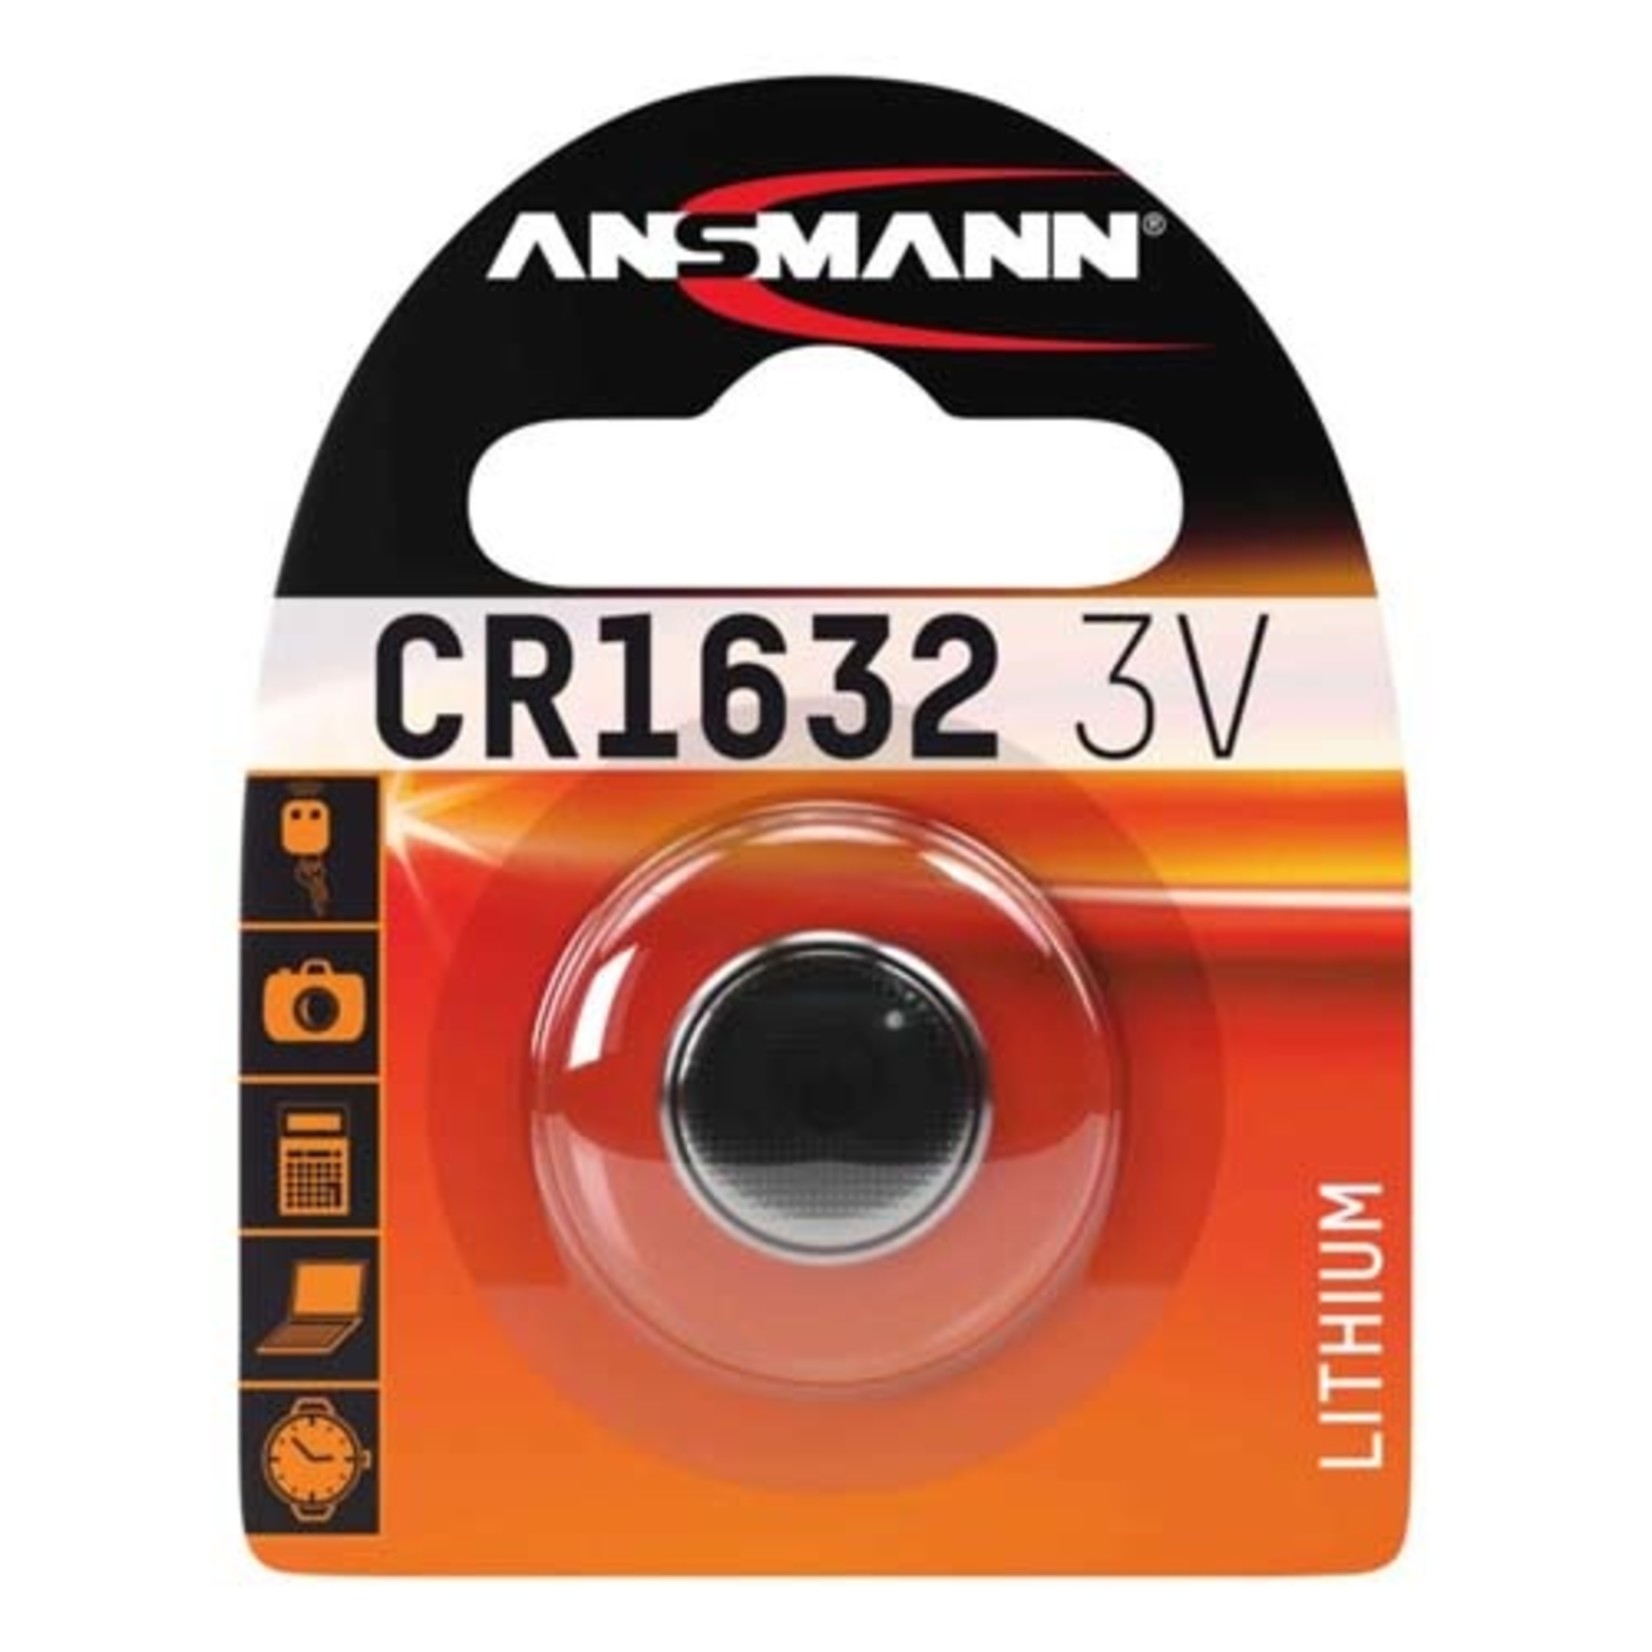 Ansmann Ansman CR1632 Battery